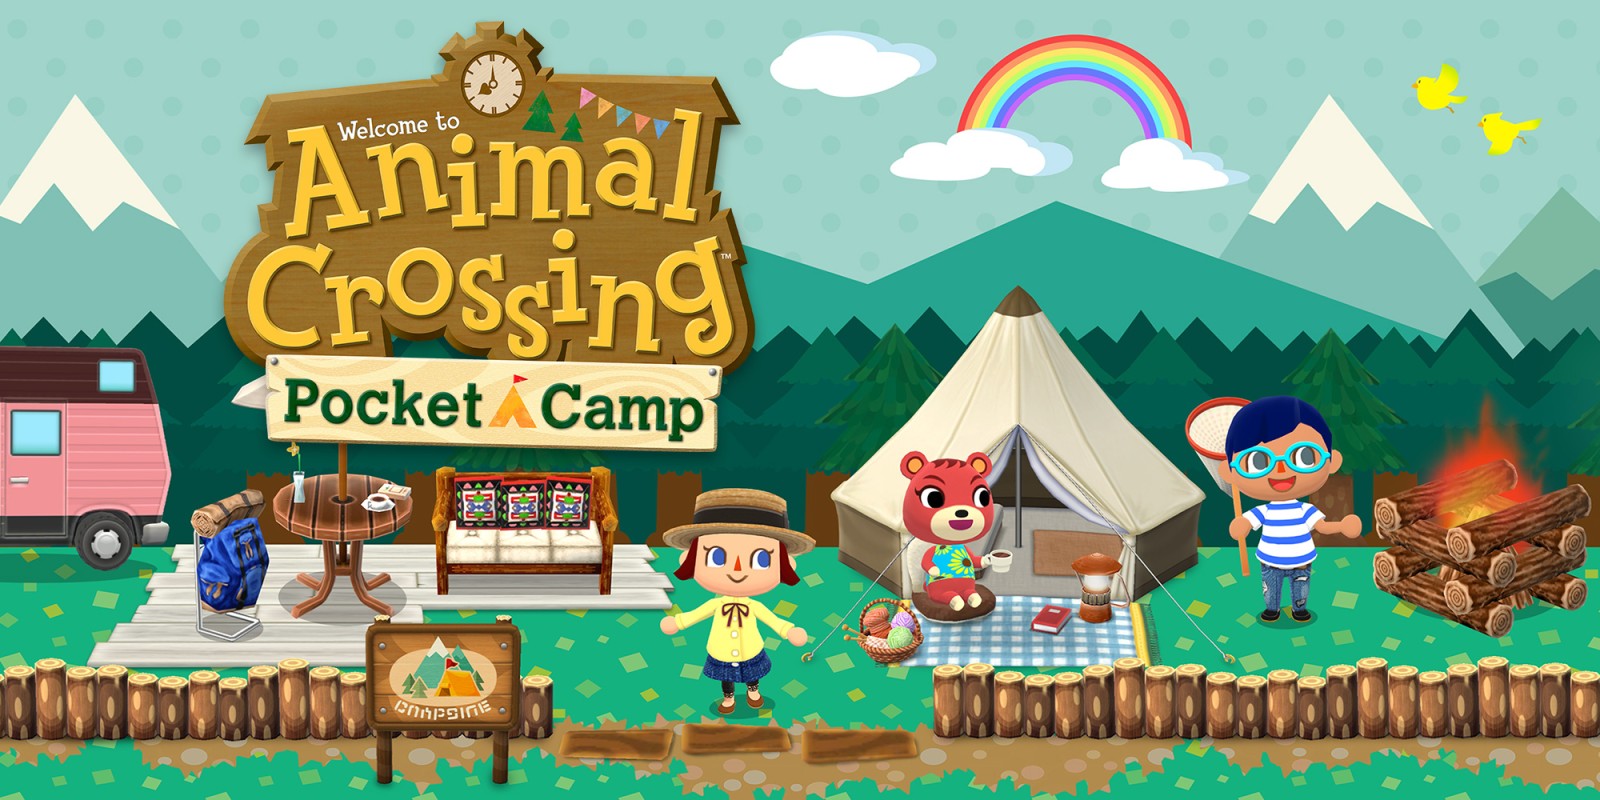 Animal Crossing Pocket Camp Poem